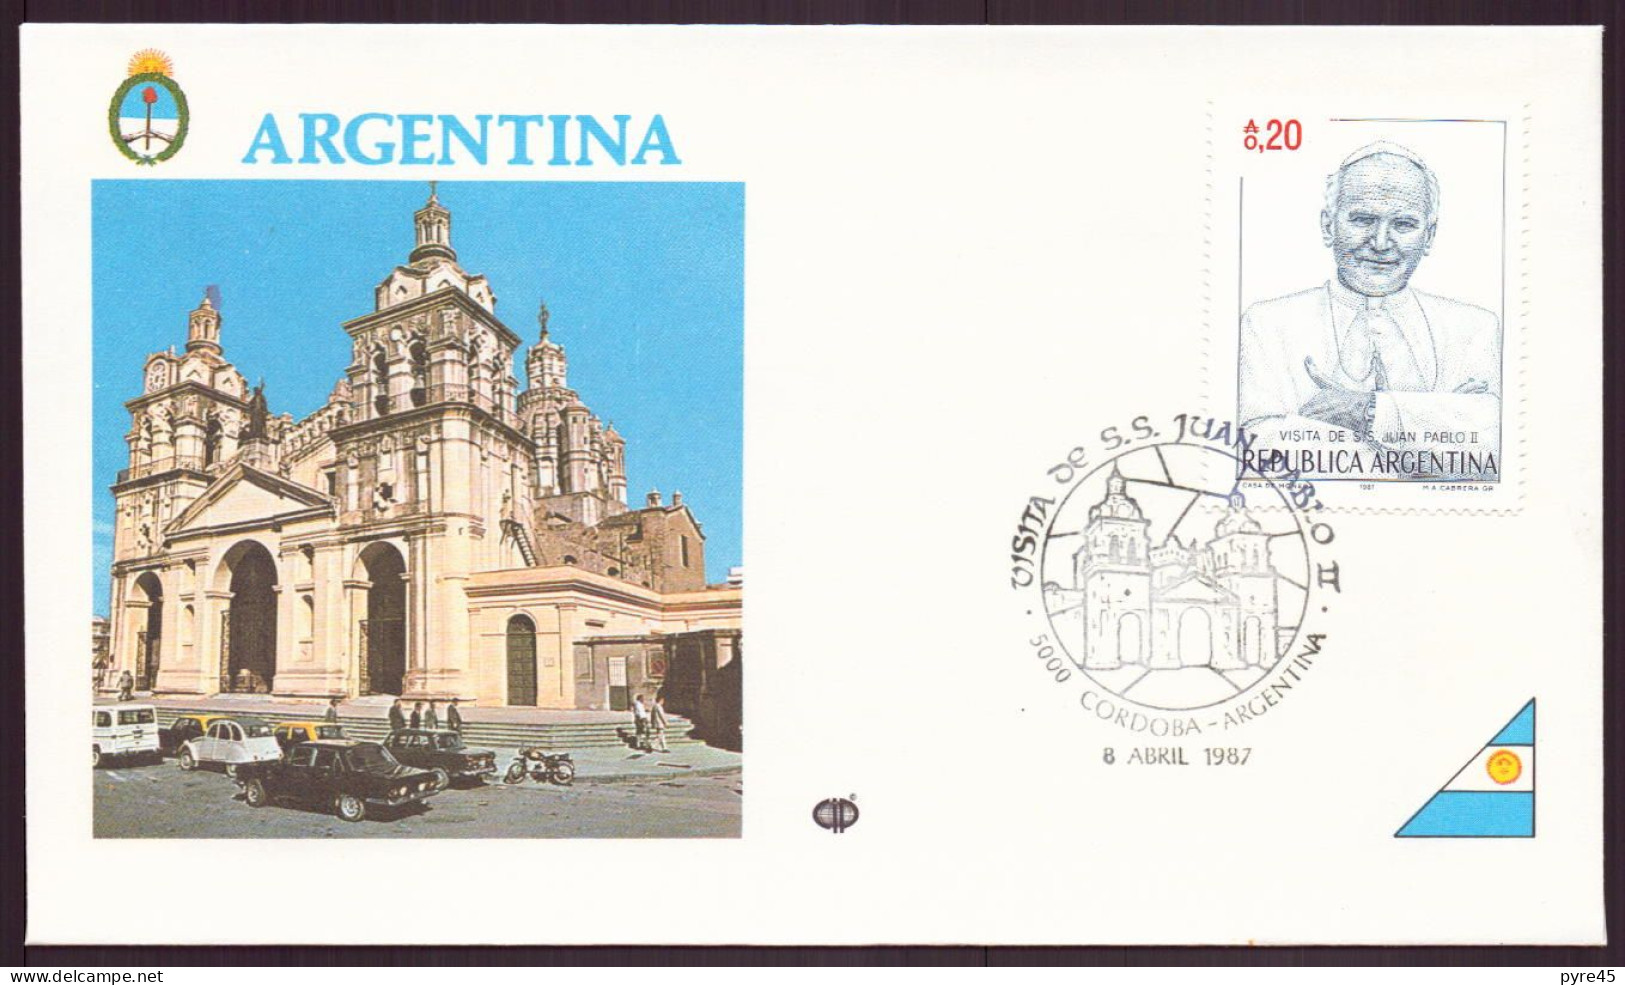 ARGENTINE ENVELOPPE COMMEMORATIVE 1987 CORDOBA VISITA DE SS JUAN PABLO II - Briefe U. Dokumente